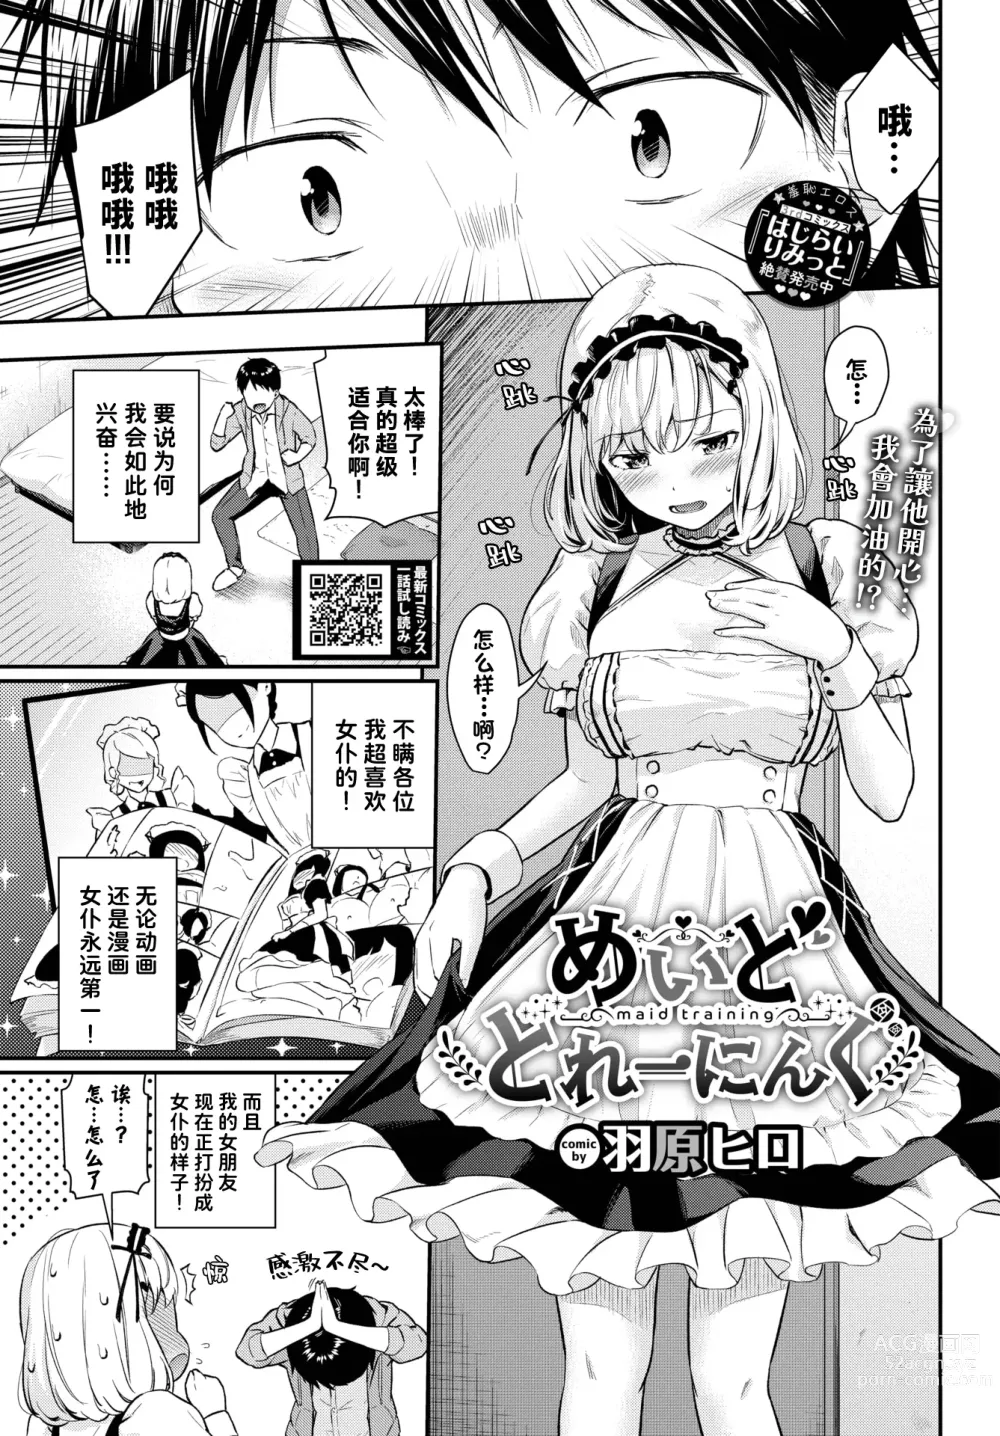 Page 2 of manga Maid Training